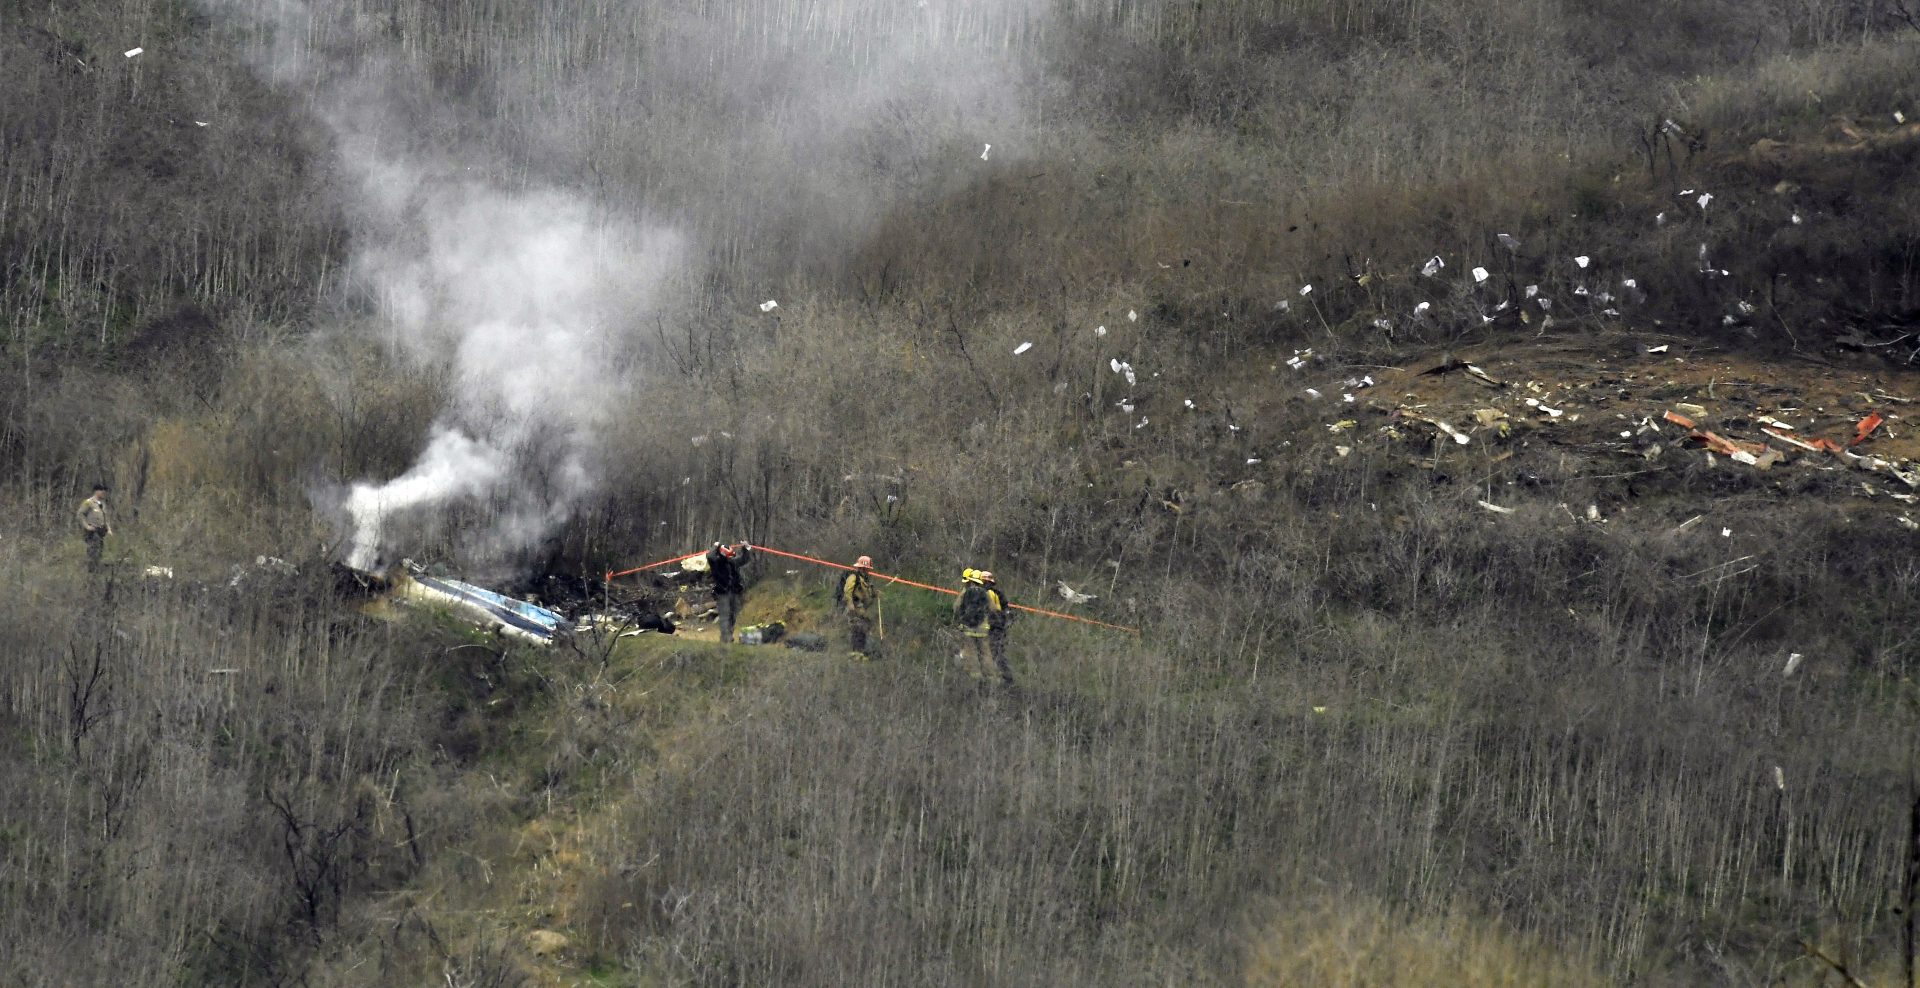 Kobe Bryant crash pilot got disoriented in clouds, US National